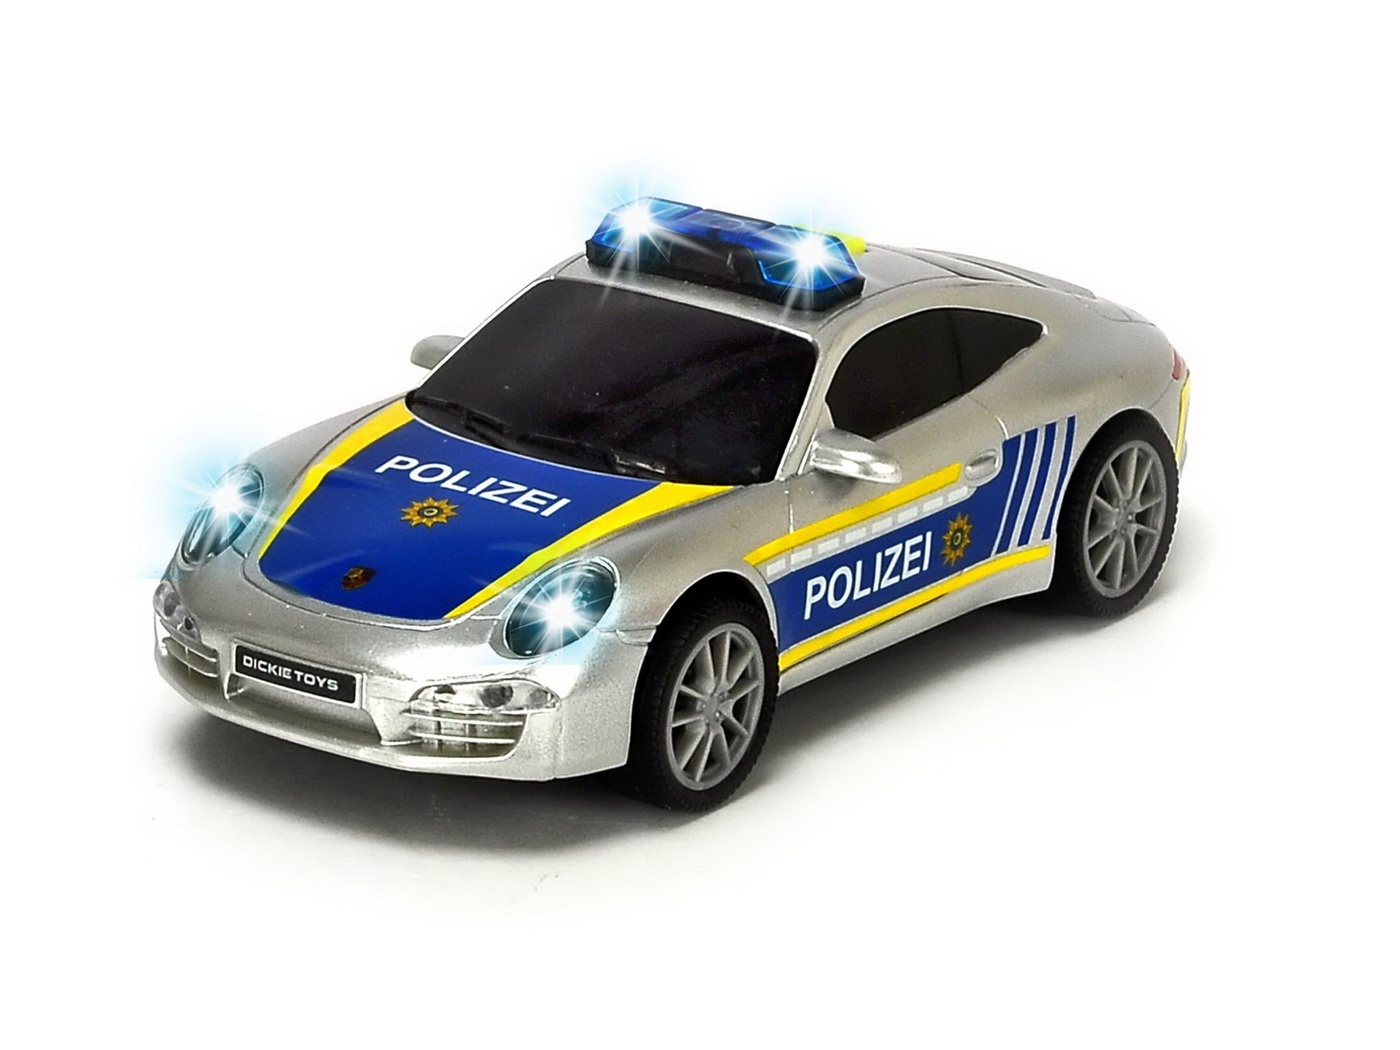 Jucarie - Porsche, masina de politie cu lumini si sunete | Dickie Toys